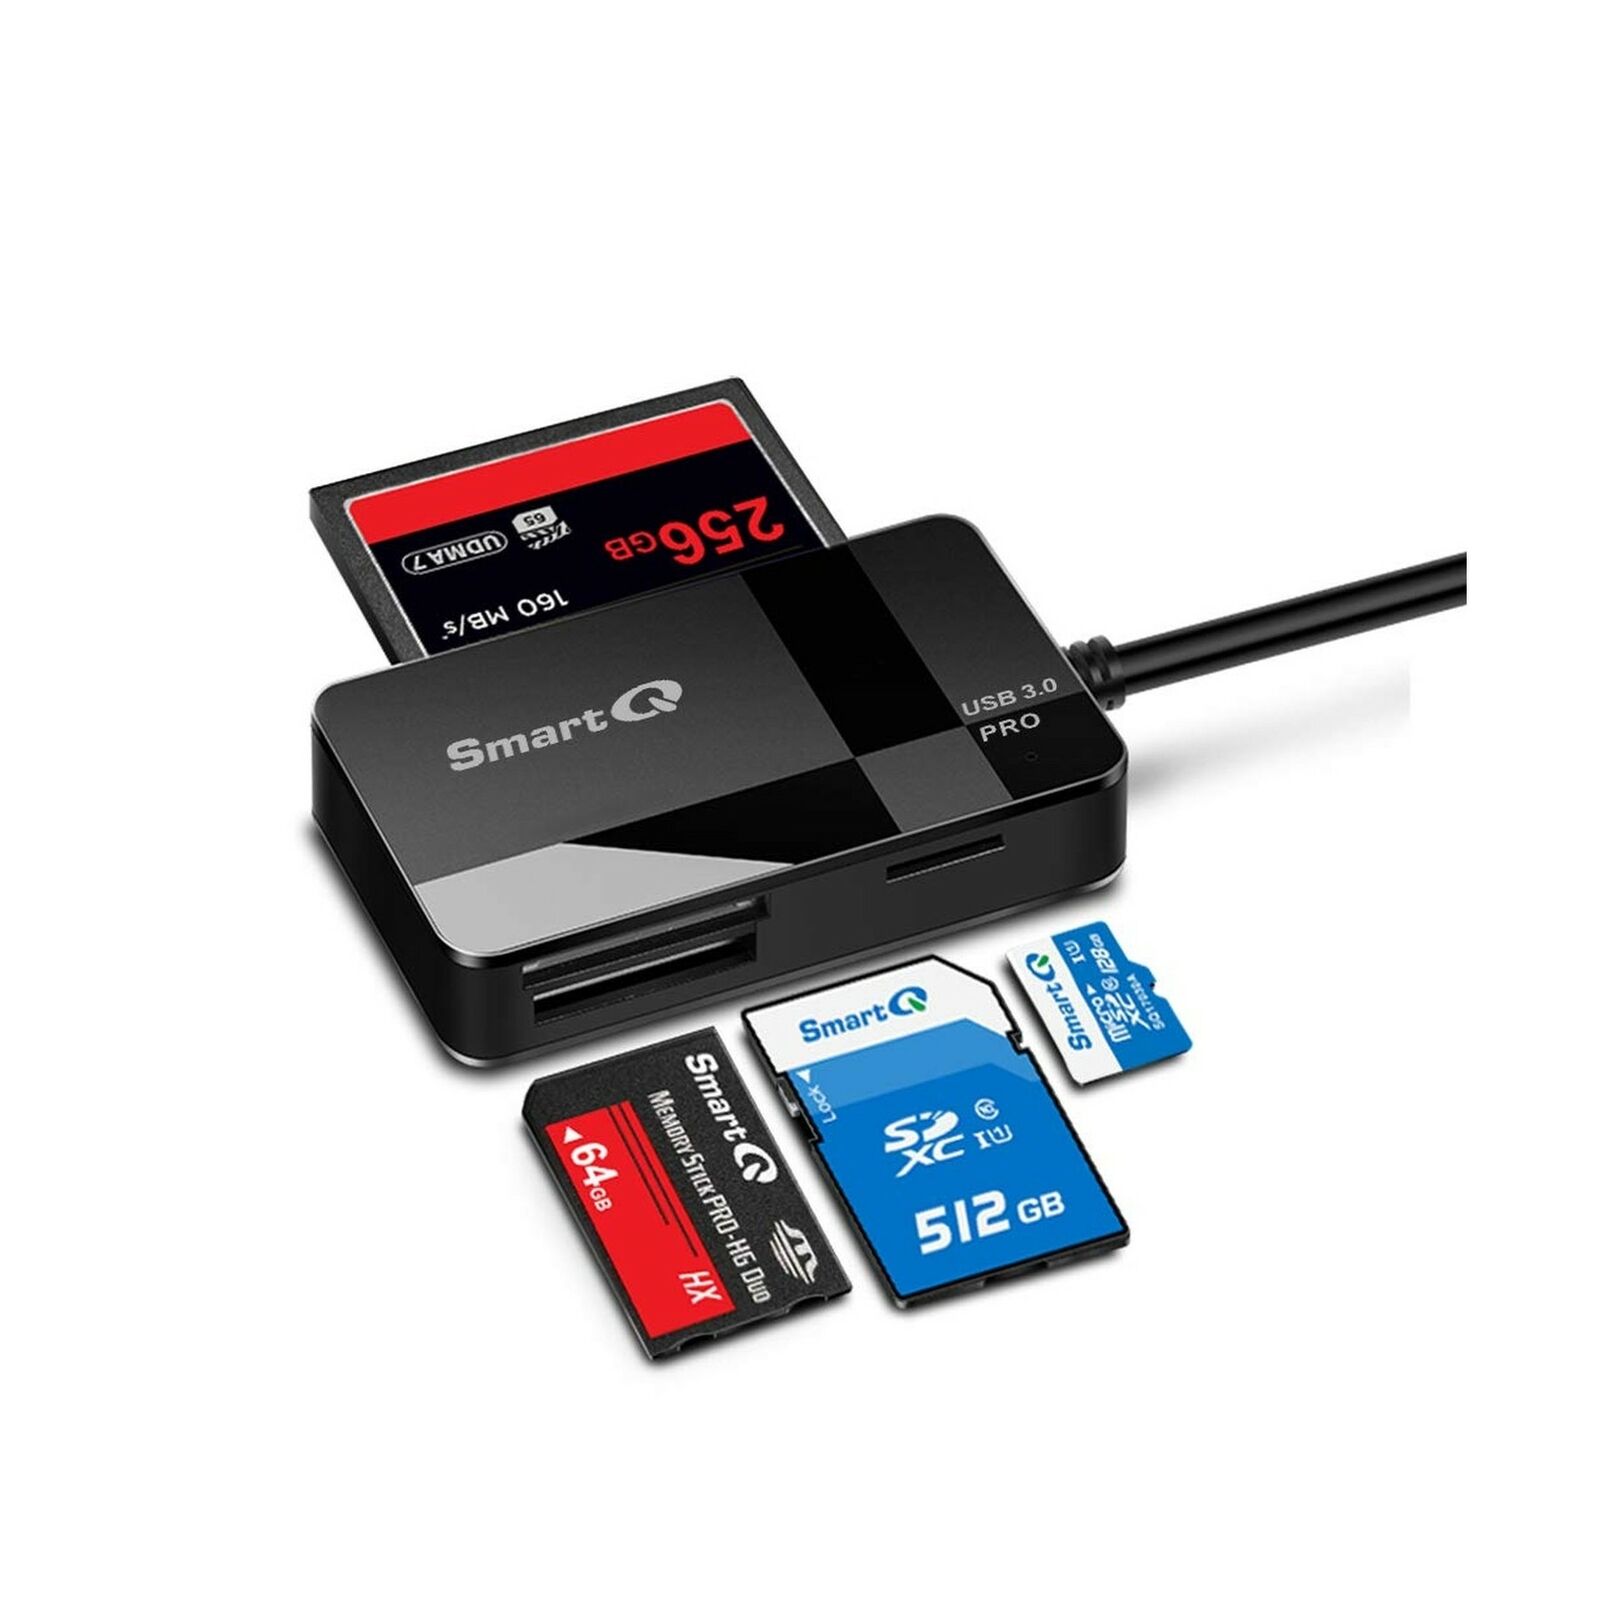 SmartQ C368 USB 3.0 Multi-Card Reader, Plug N Play, Apple and Windows Compati...